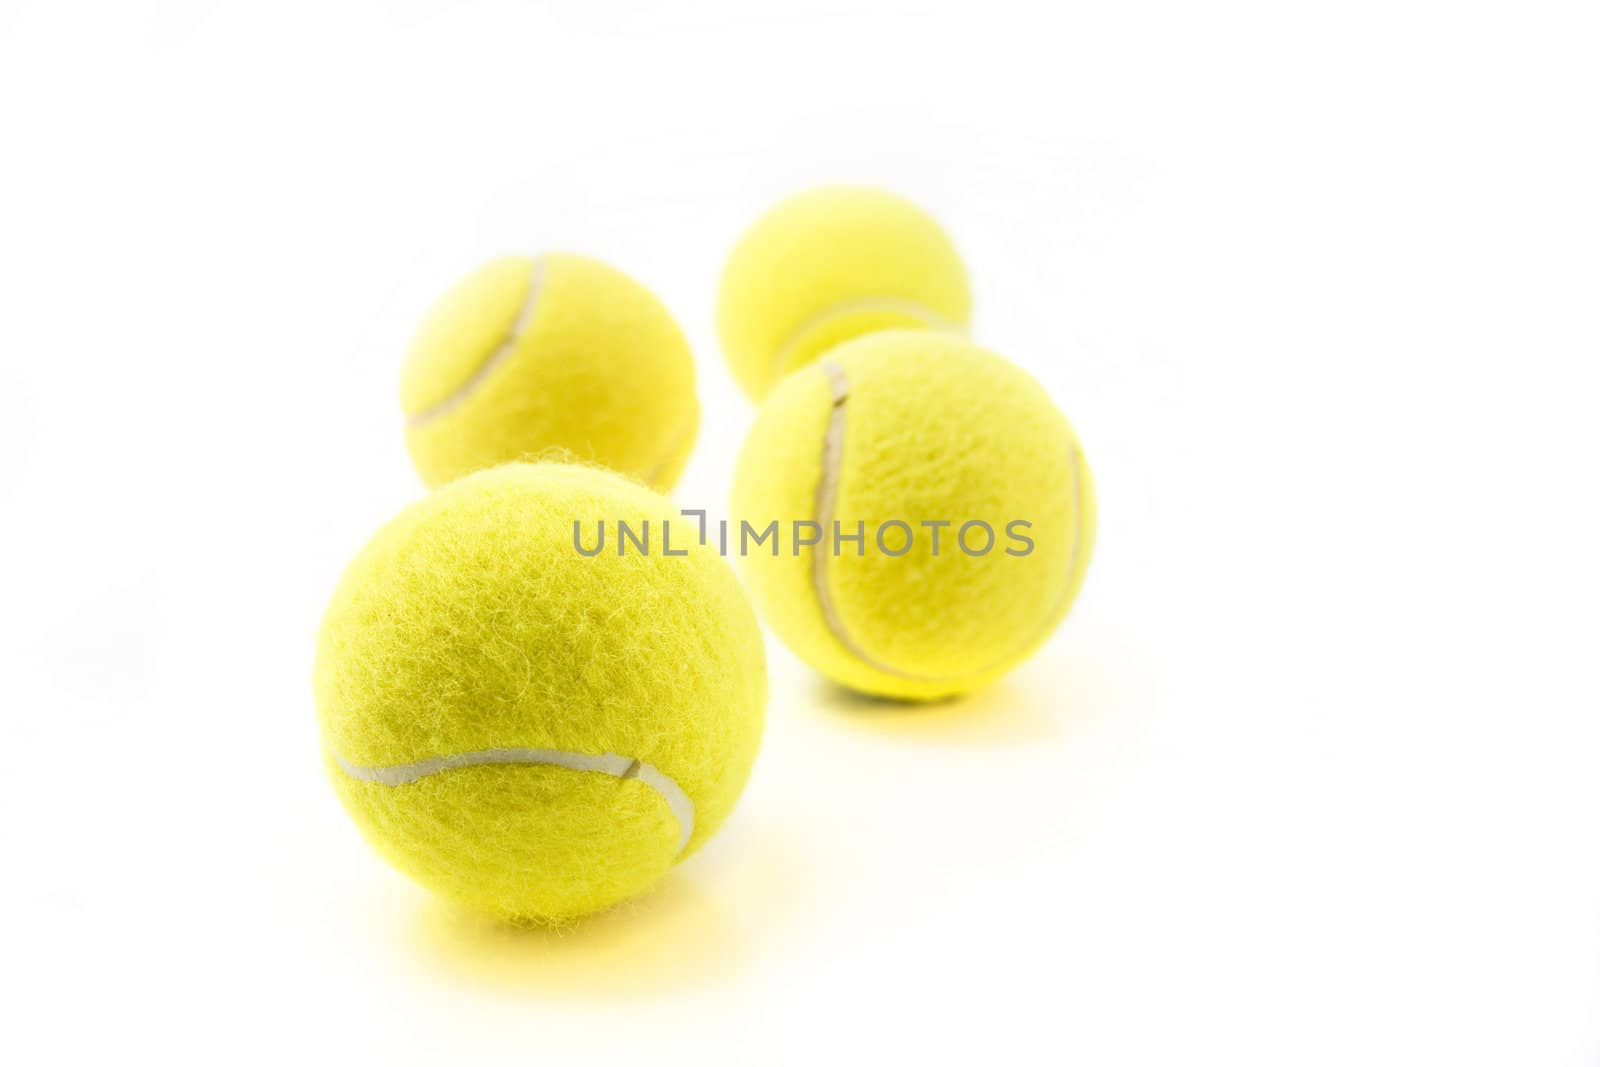 Four tennis balls isolated on white background